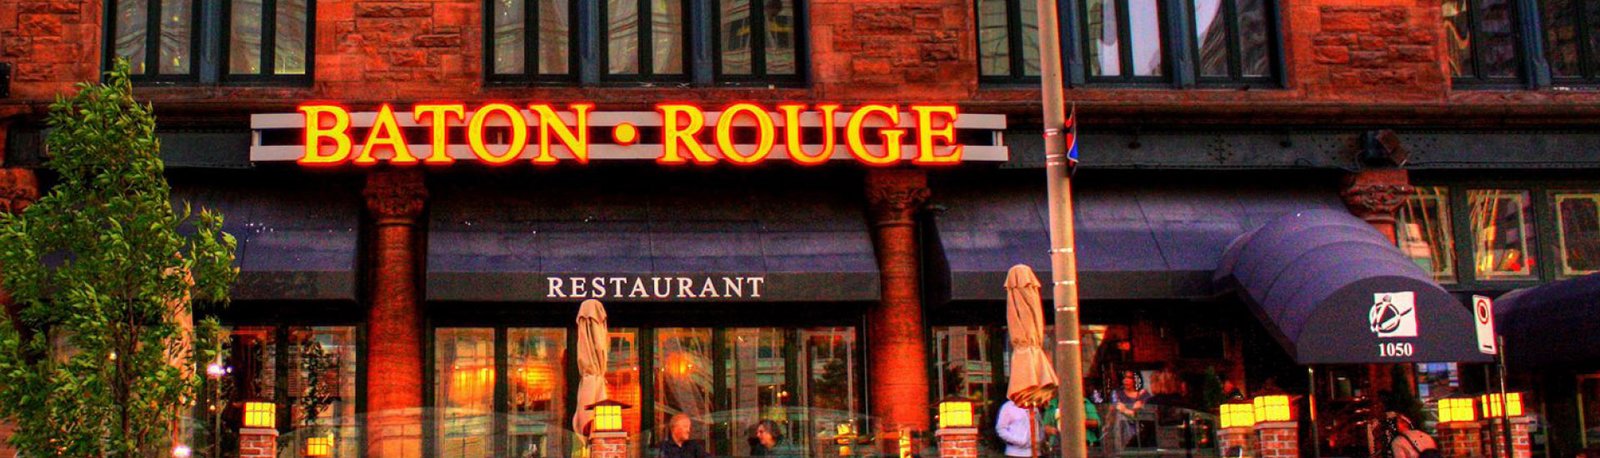 Laval restaurants file lawsuit against their insurers